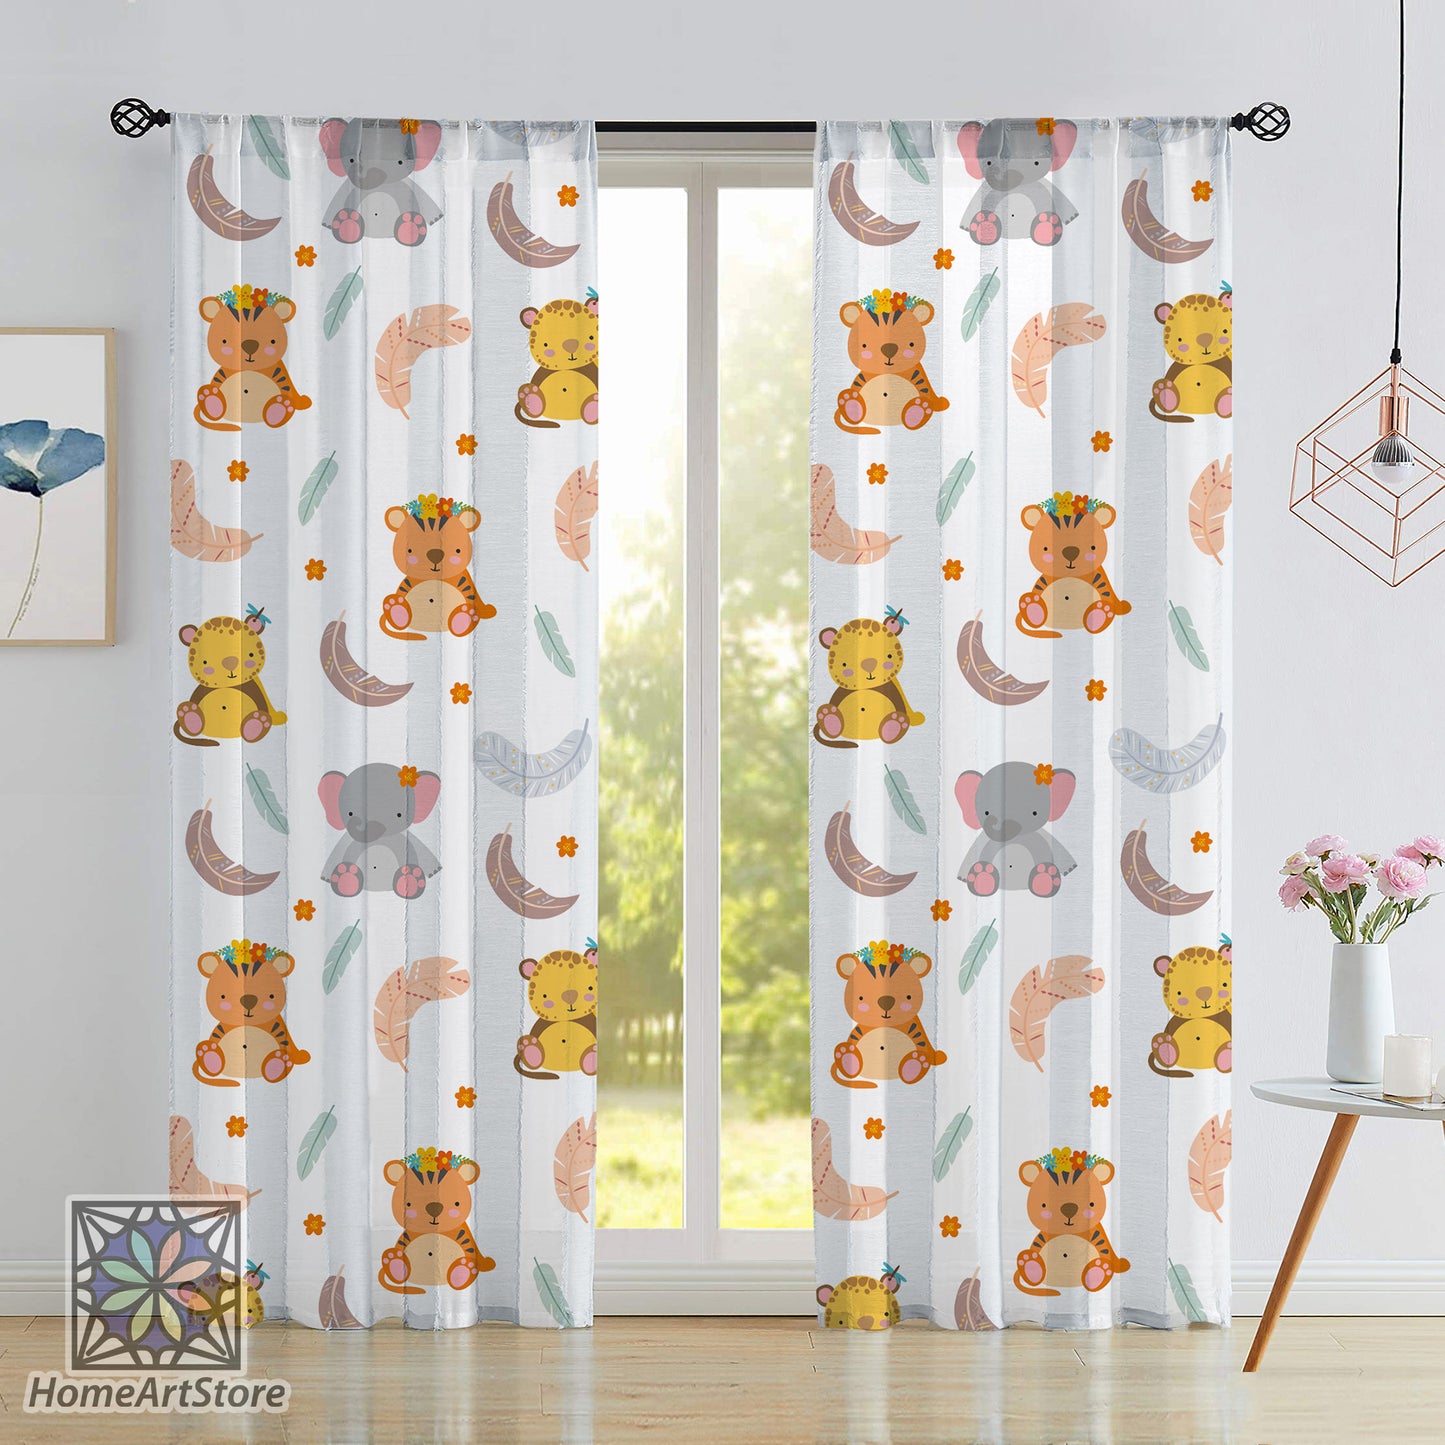 Safari Animals Zoo Themed Curtain, Feathers Patterned Curtain, Cute Baby Room Curtain, Nursery Decor, Newborn Gift